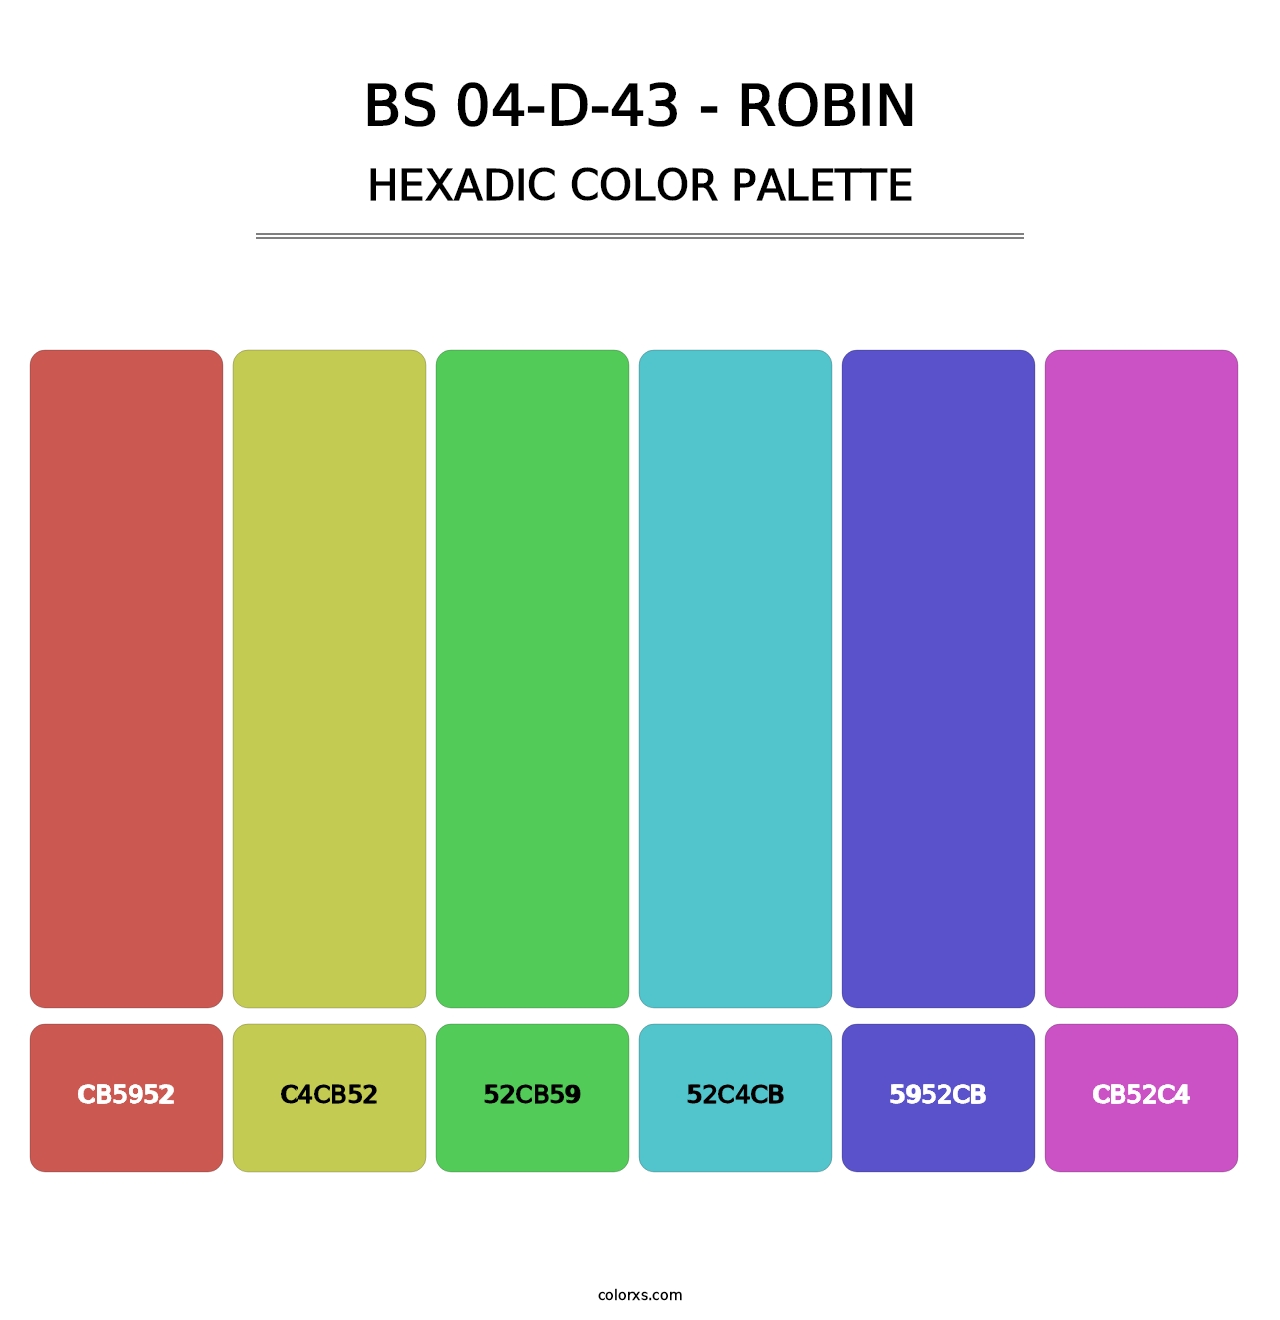 BS 04-D-43 - Robin - Hexadic Color Palette